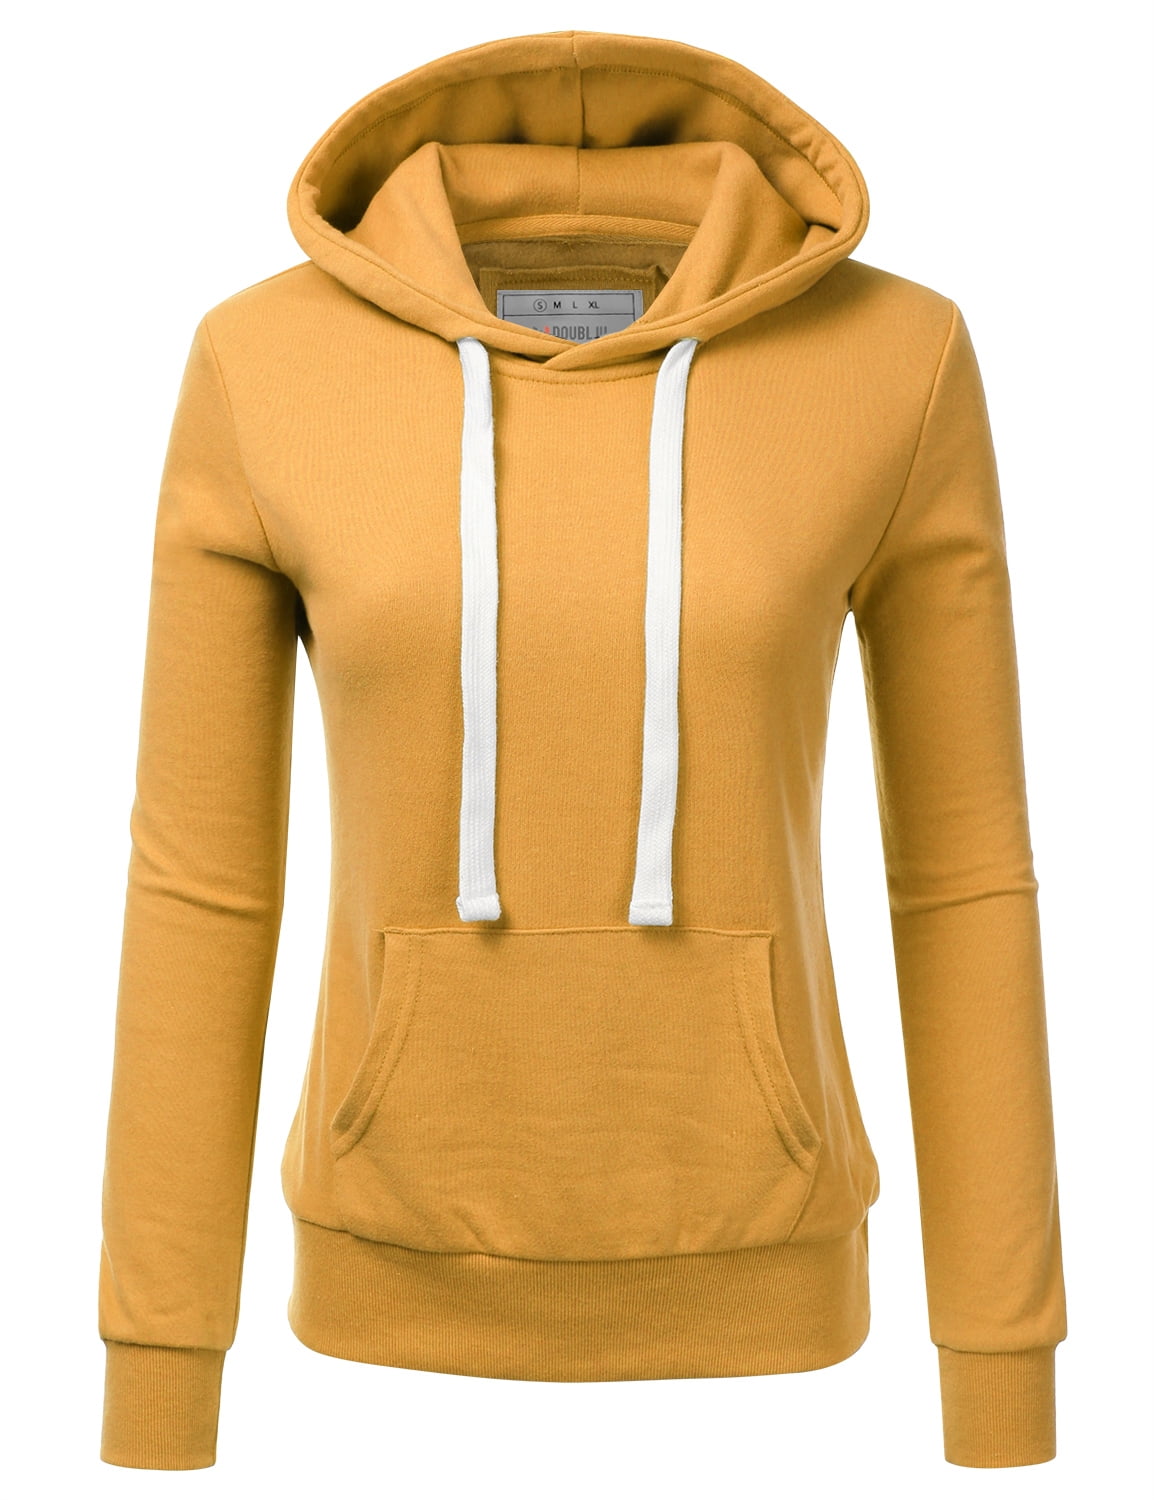 Doublju Women's Basic Lightweight Pullover Hoodie Sweatshirt with Plus Size  